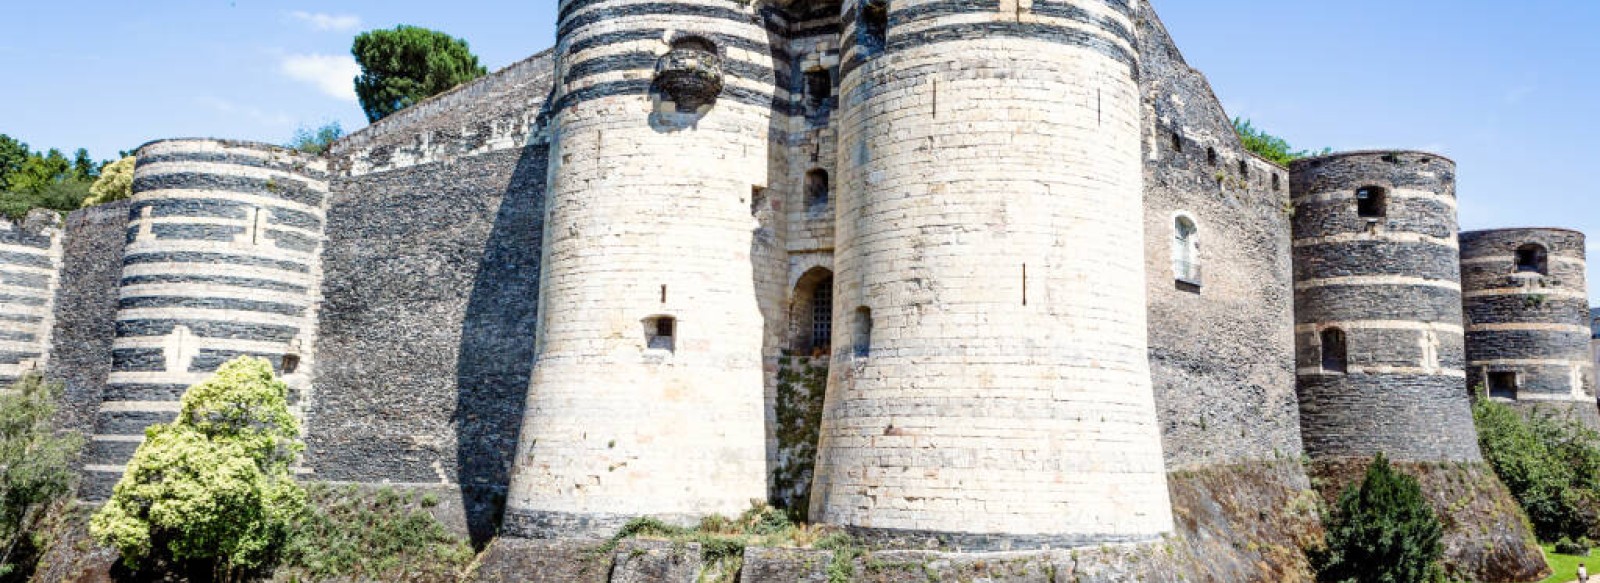 Domaine national du Chateau d'Angers